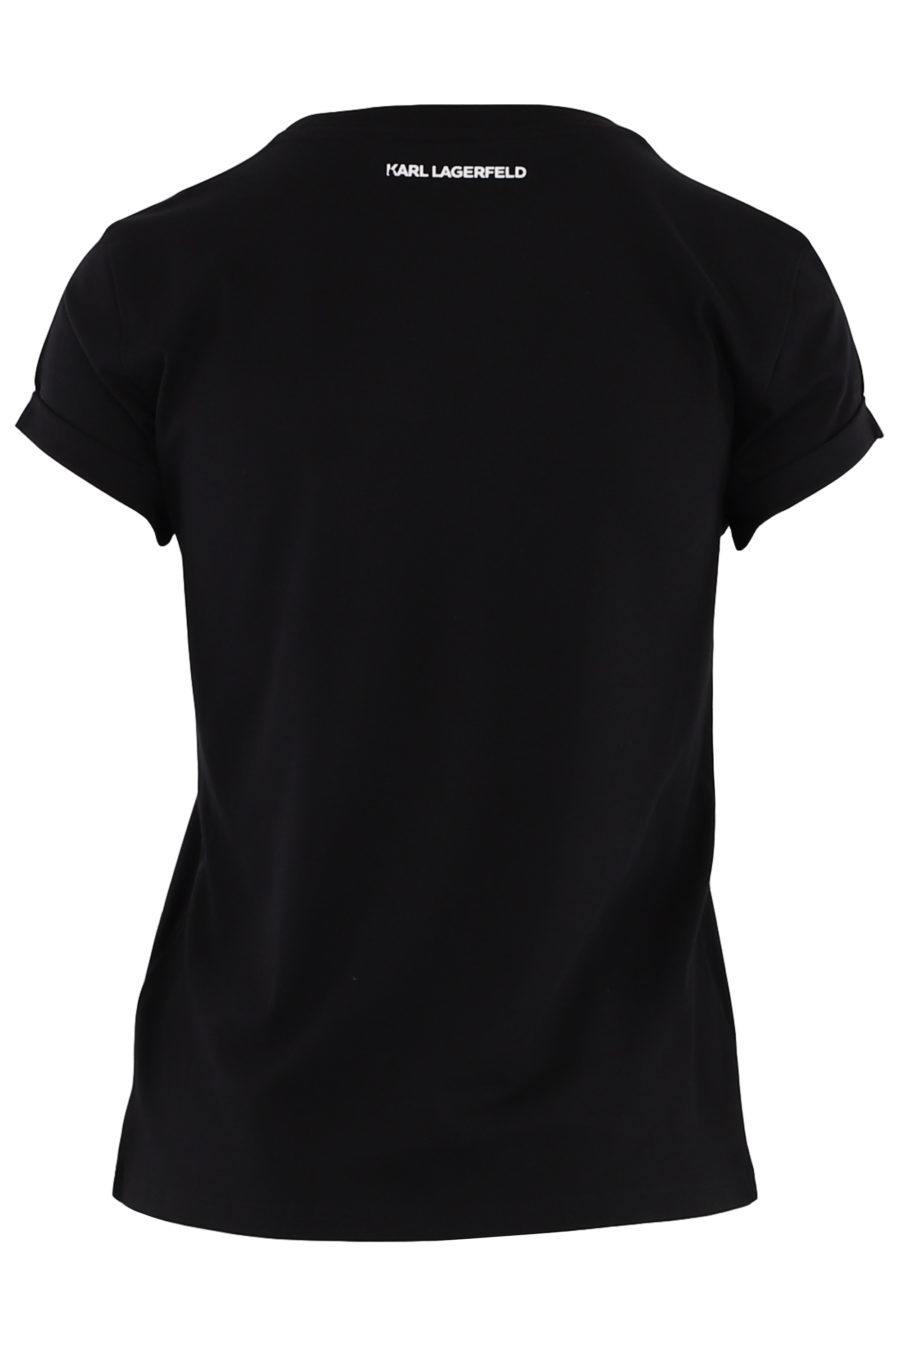 Camiseta negra con bolsillo y logo - cd77085dba12c787658b64250abb9bce94ebd104